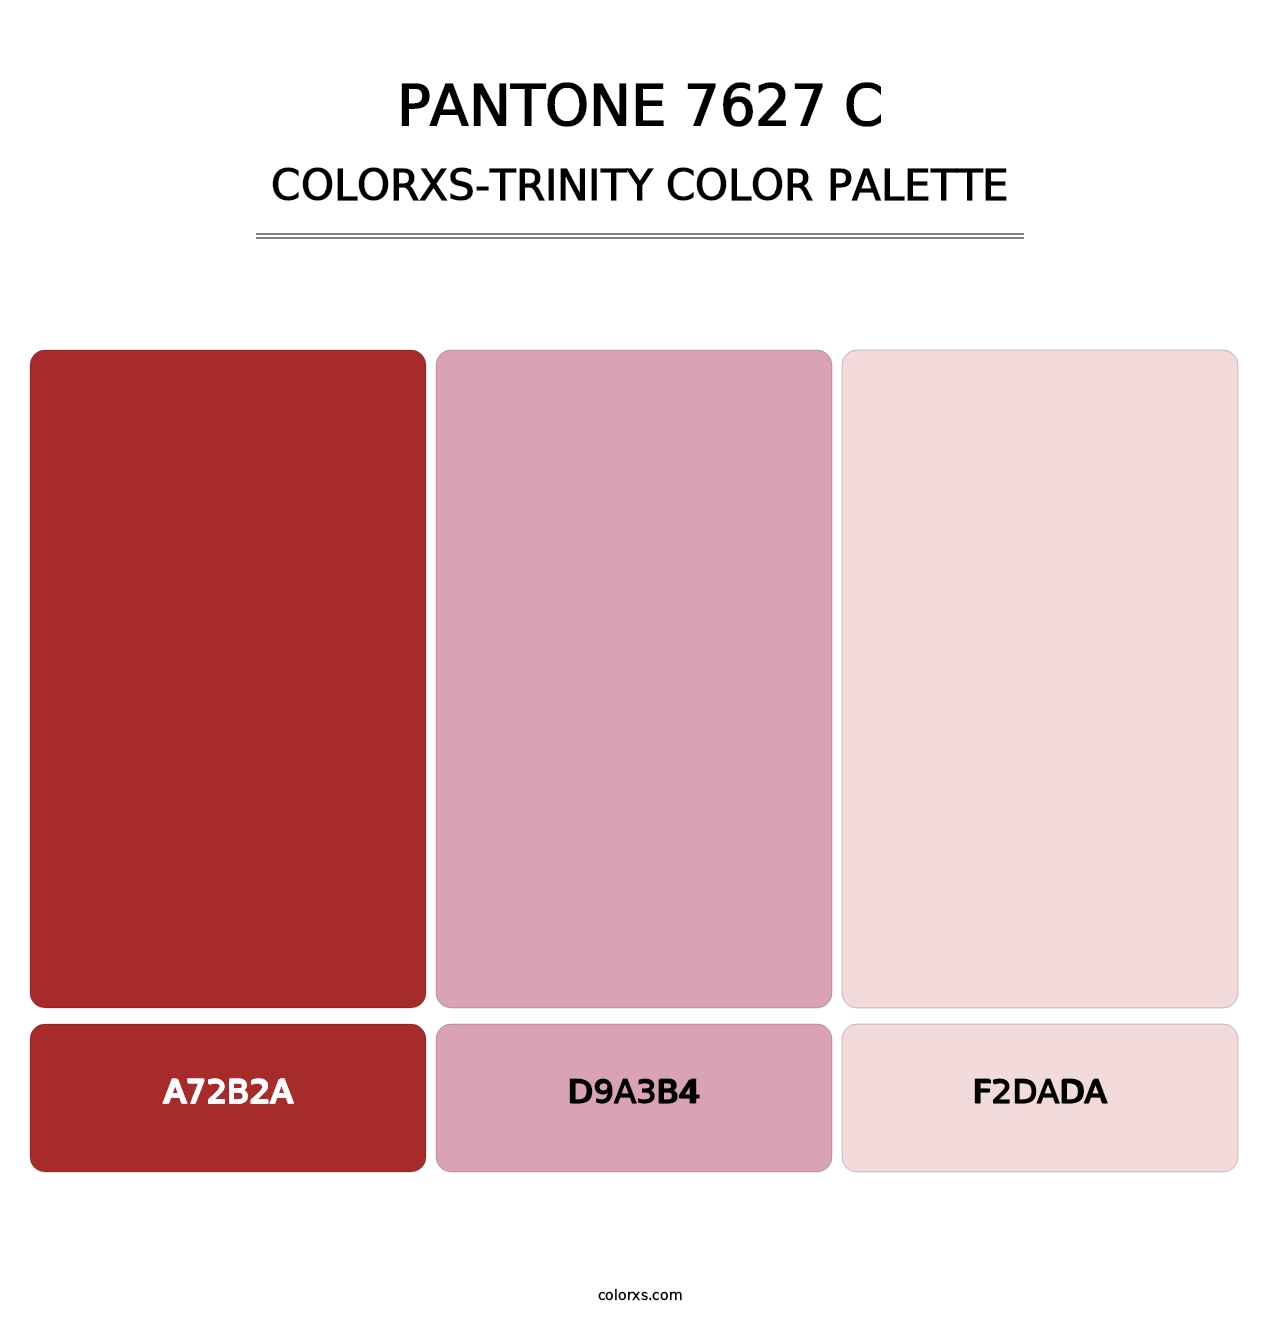 PANTONE 7627 C - Colorxs Trinity Palette